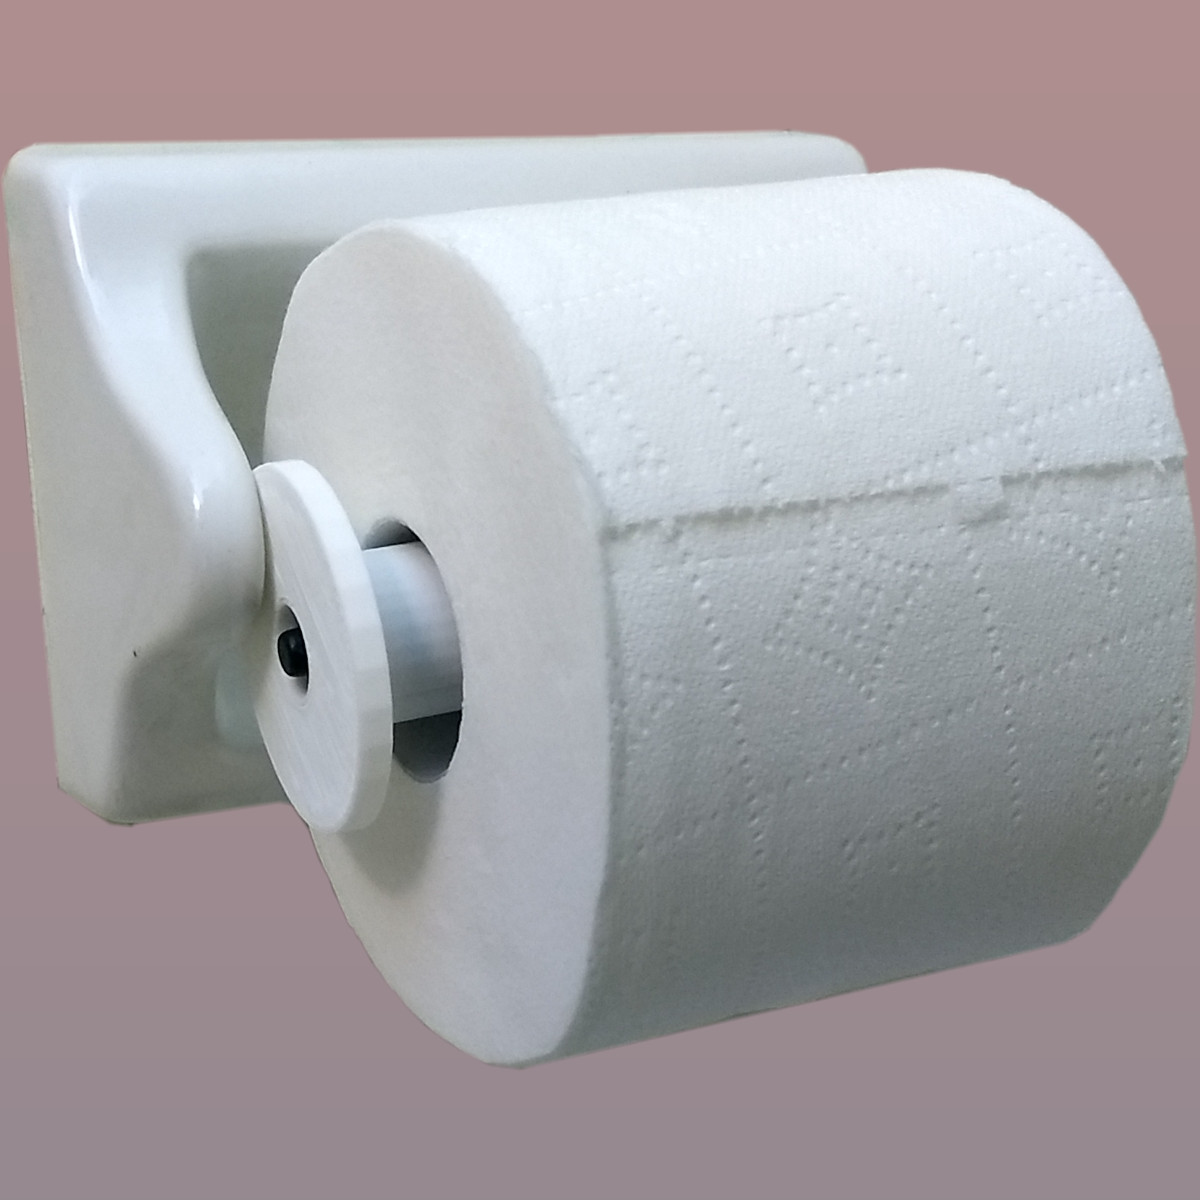 Toilet Paper Roll Extender